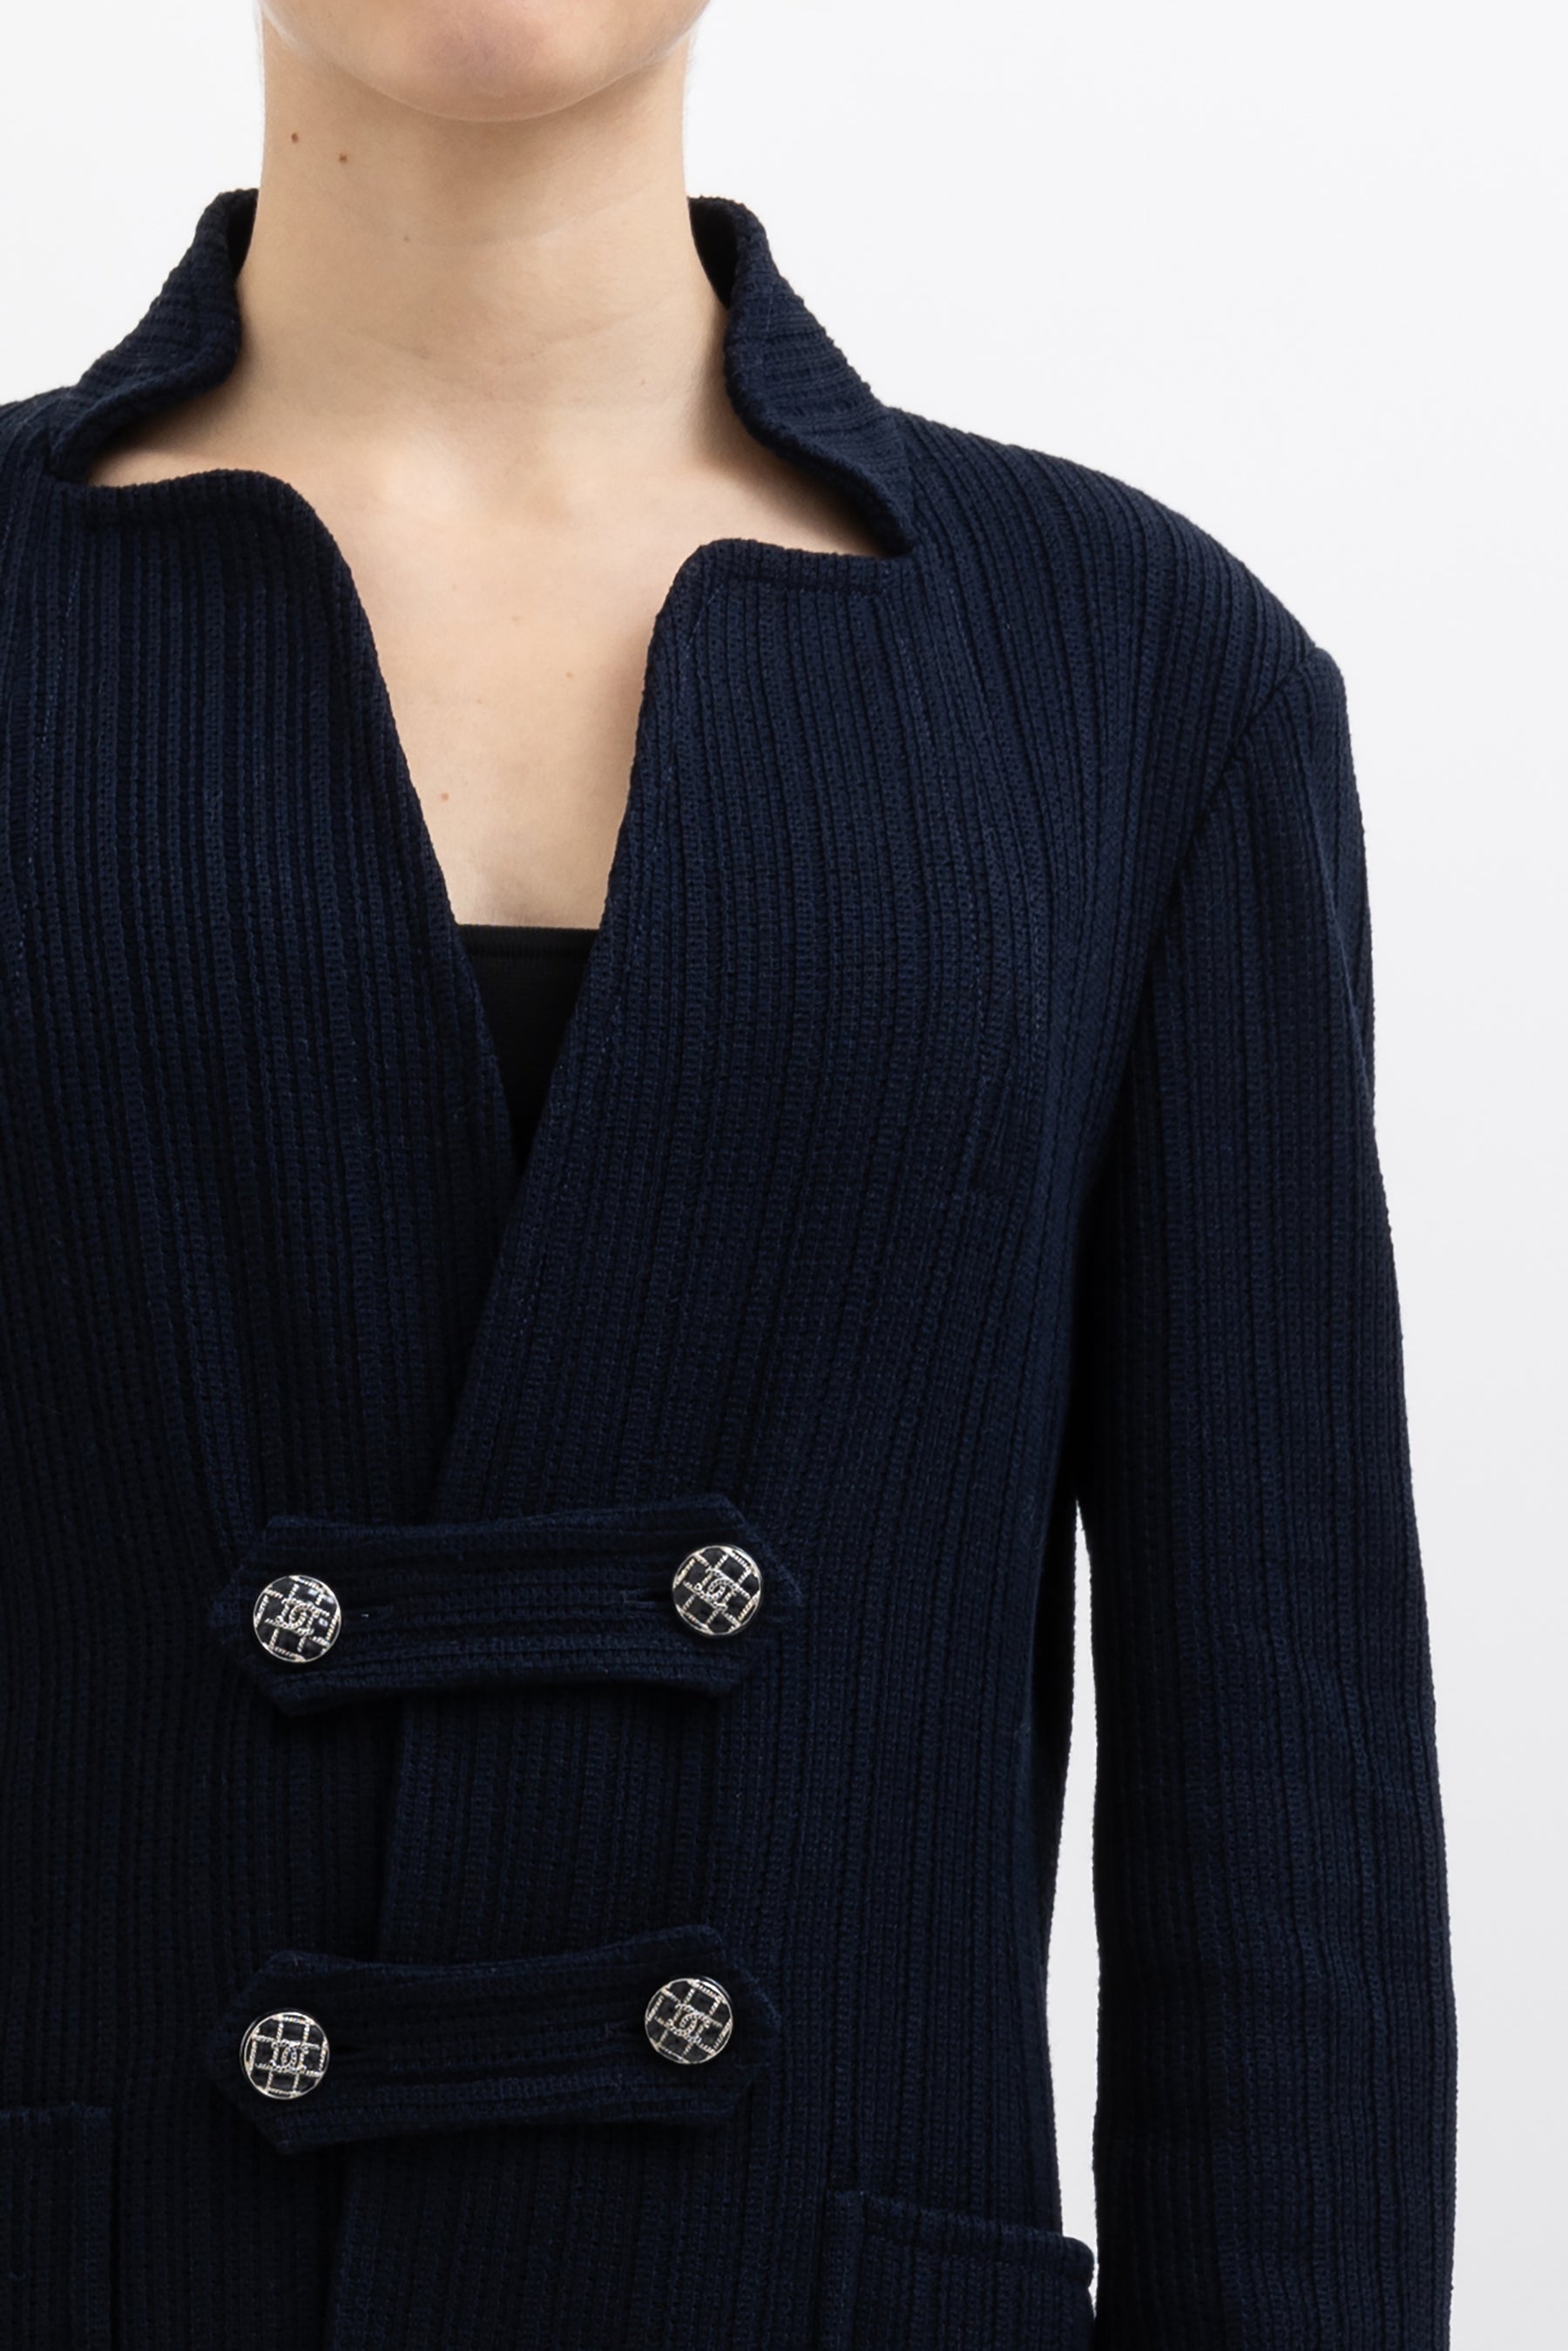 chanel-navy-jacket-with-mandarin-style-collar-fr42-au14-a004